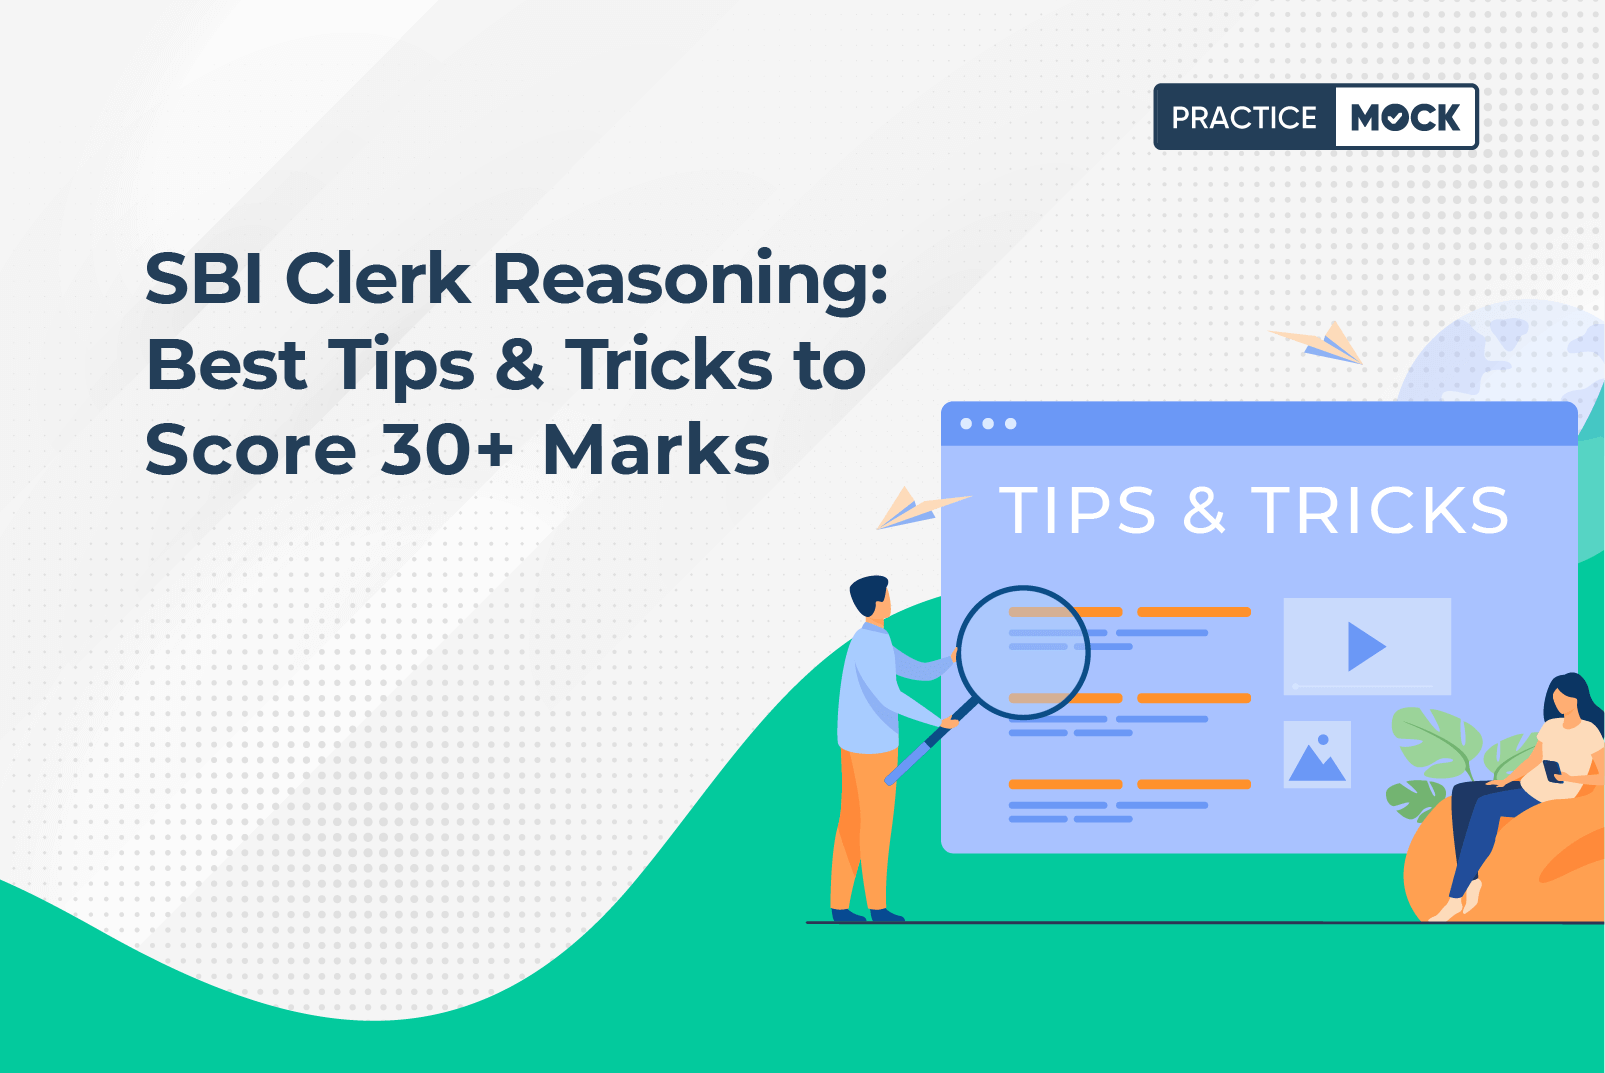 SBI Clerk Reasoning Best Tips & Tricks to Score 30+ Marks